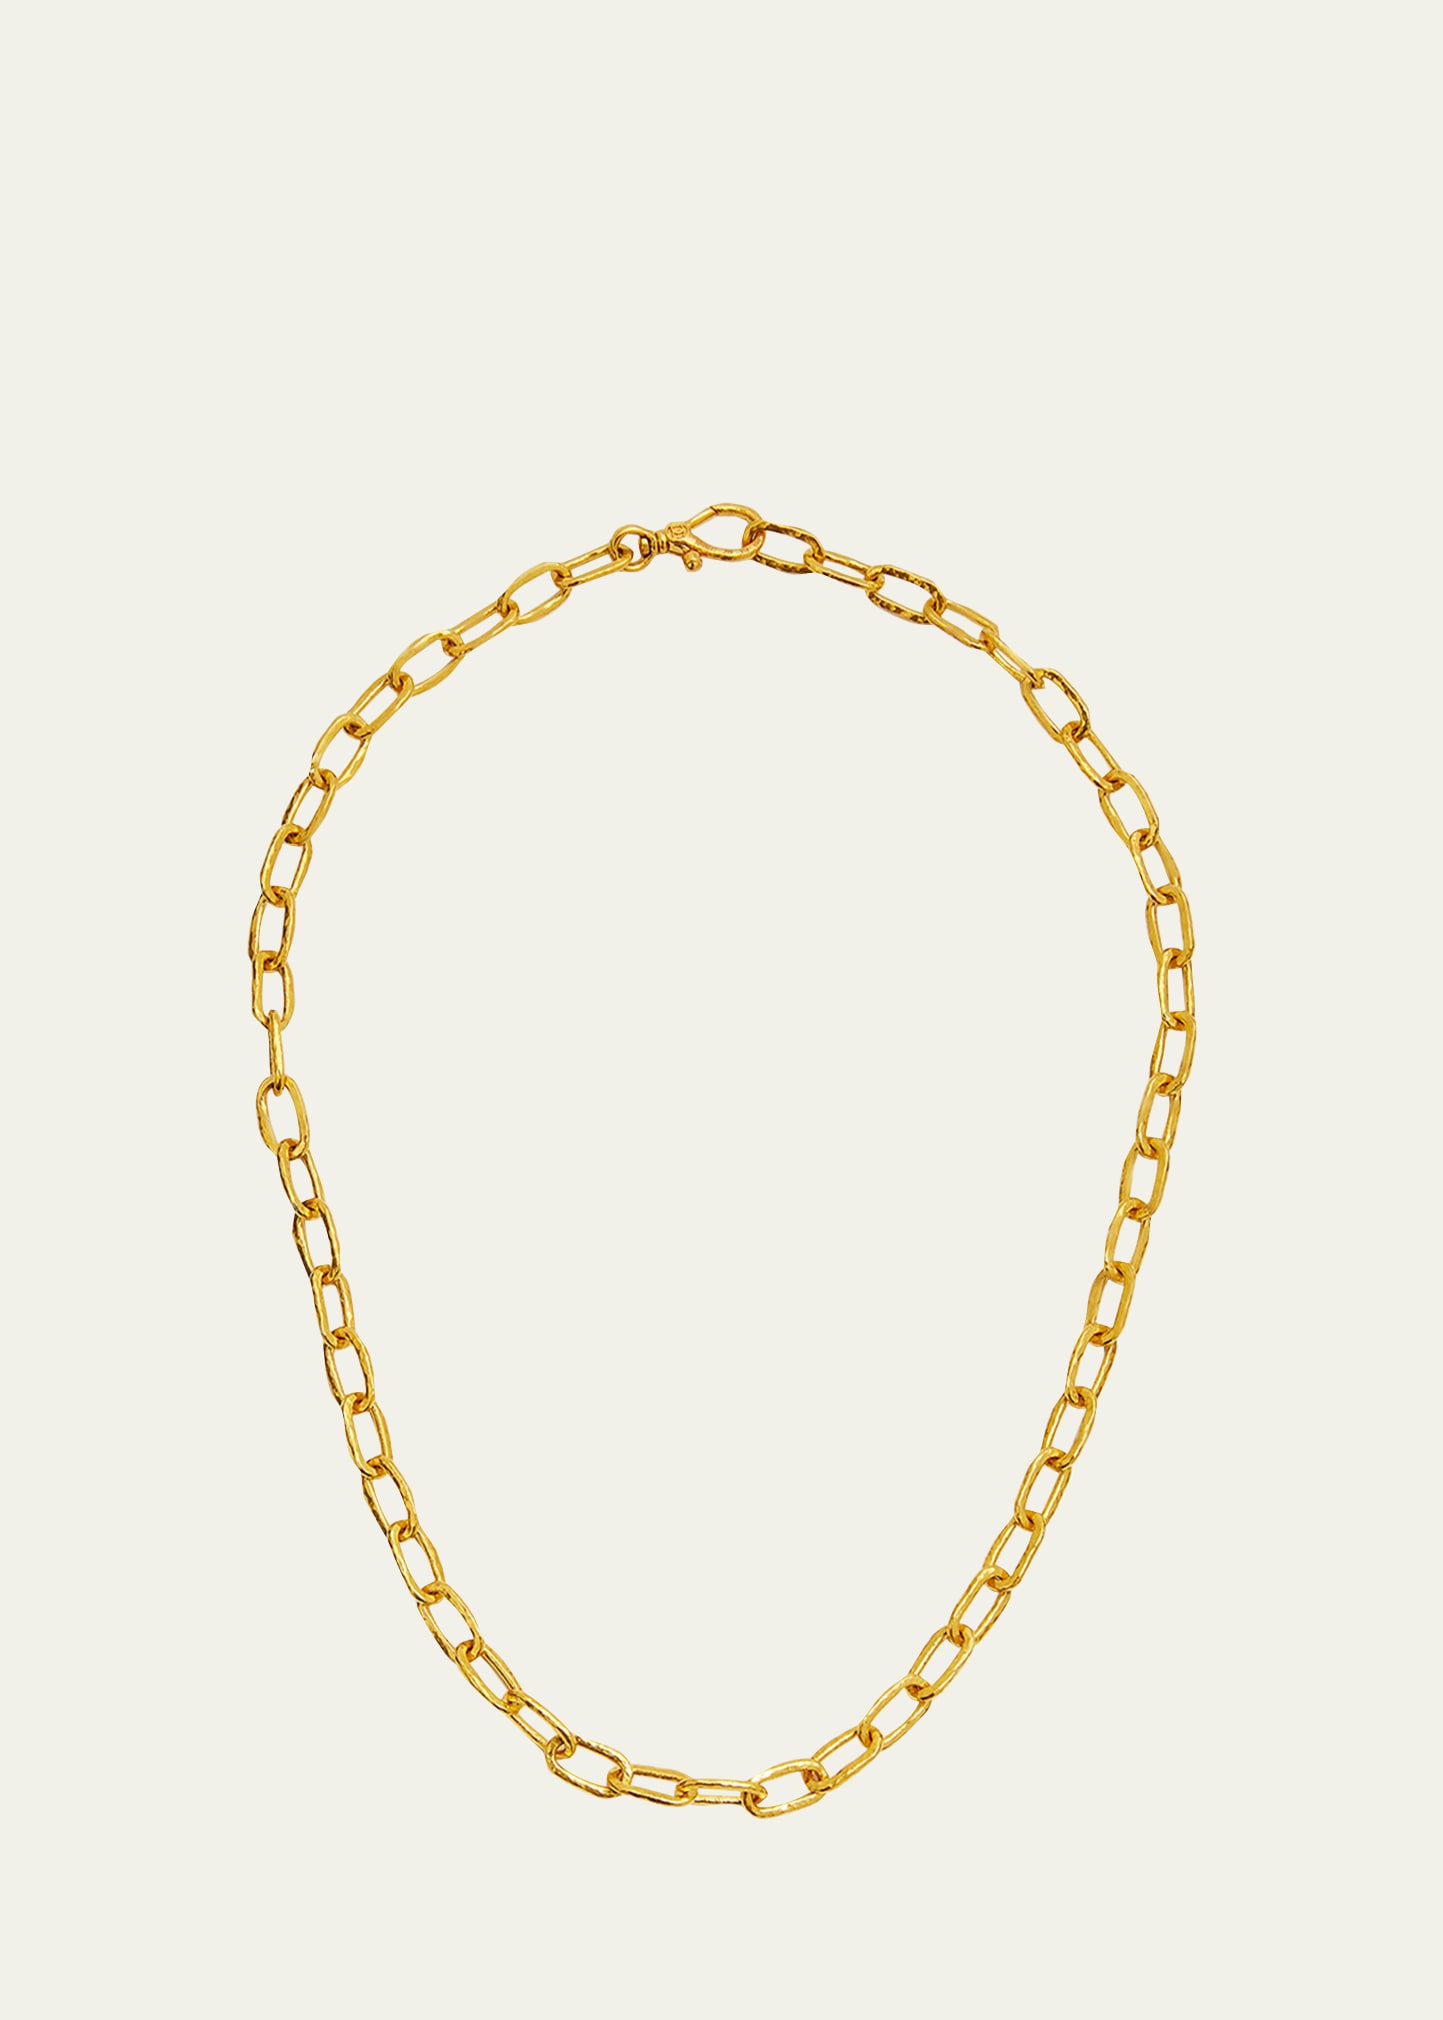 Gurhan Men's 24K Yellow Gold Chain Necklace, 18"L